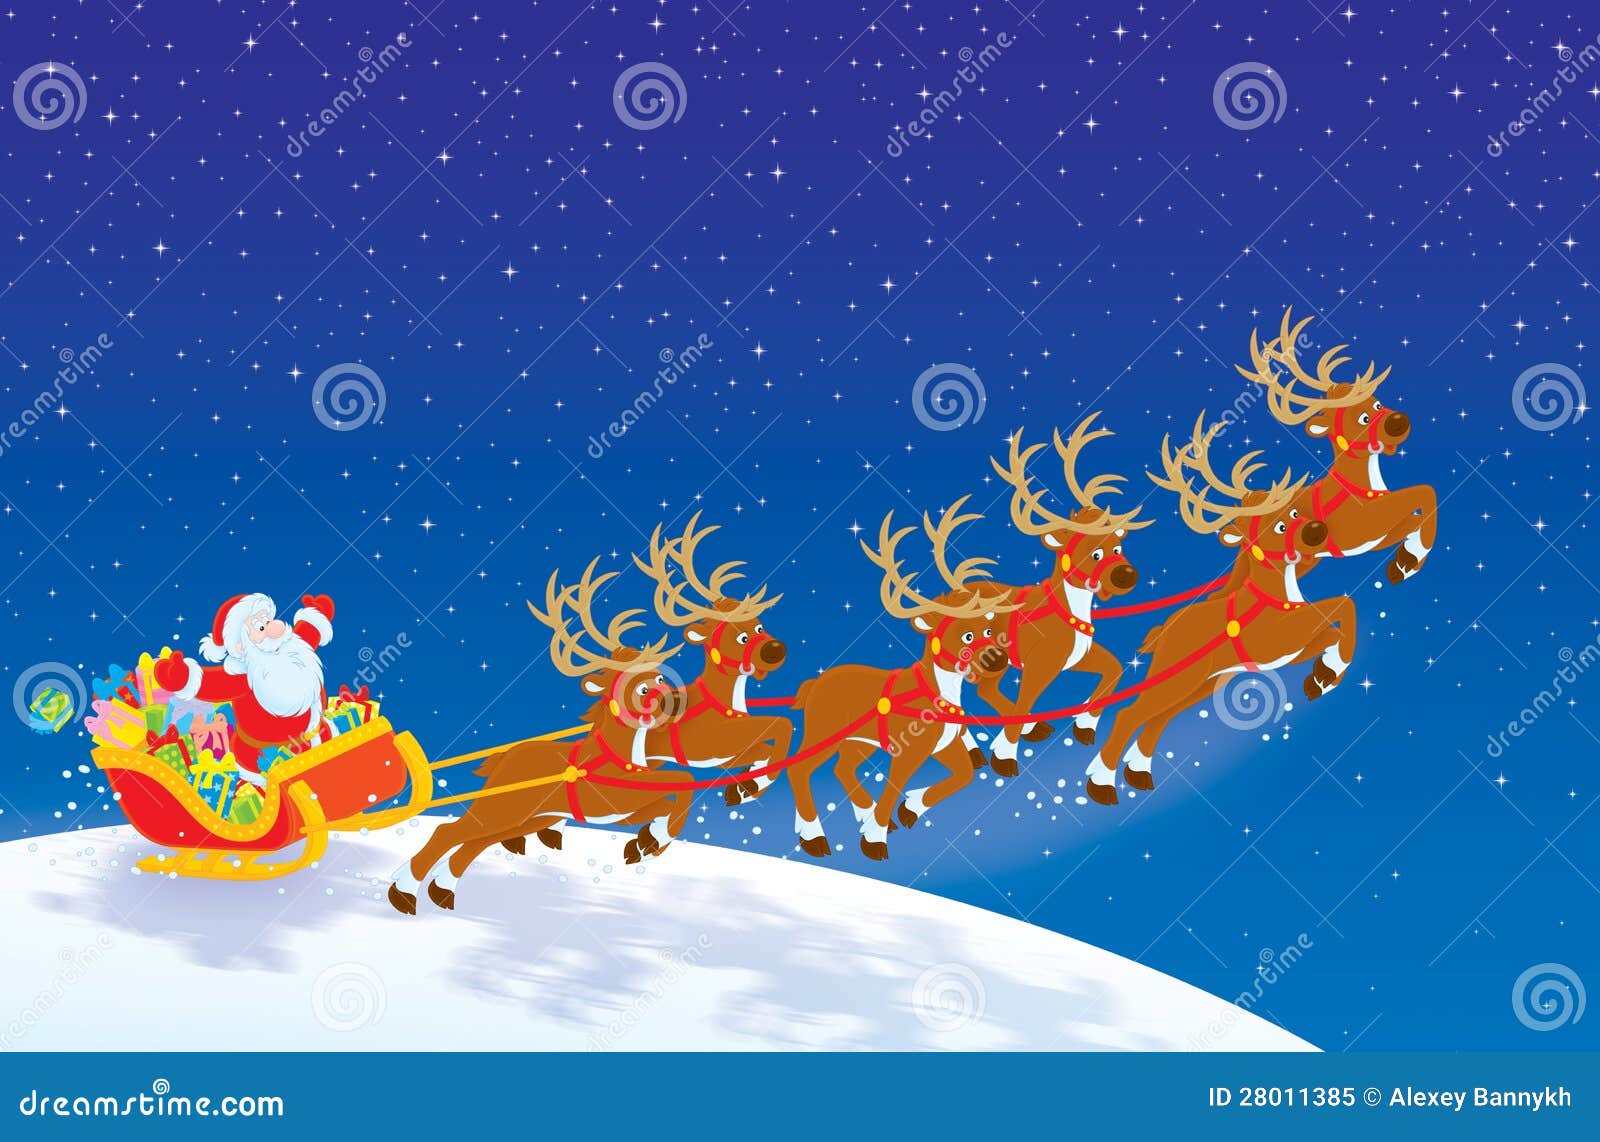 Sleigh of Santa taking off stock illustration. Illustration of holidays